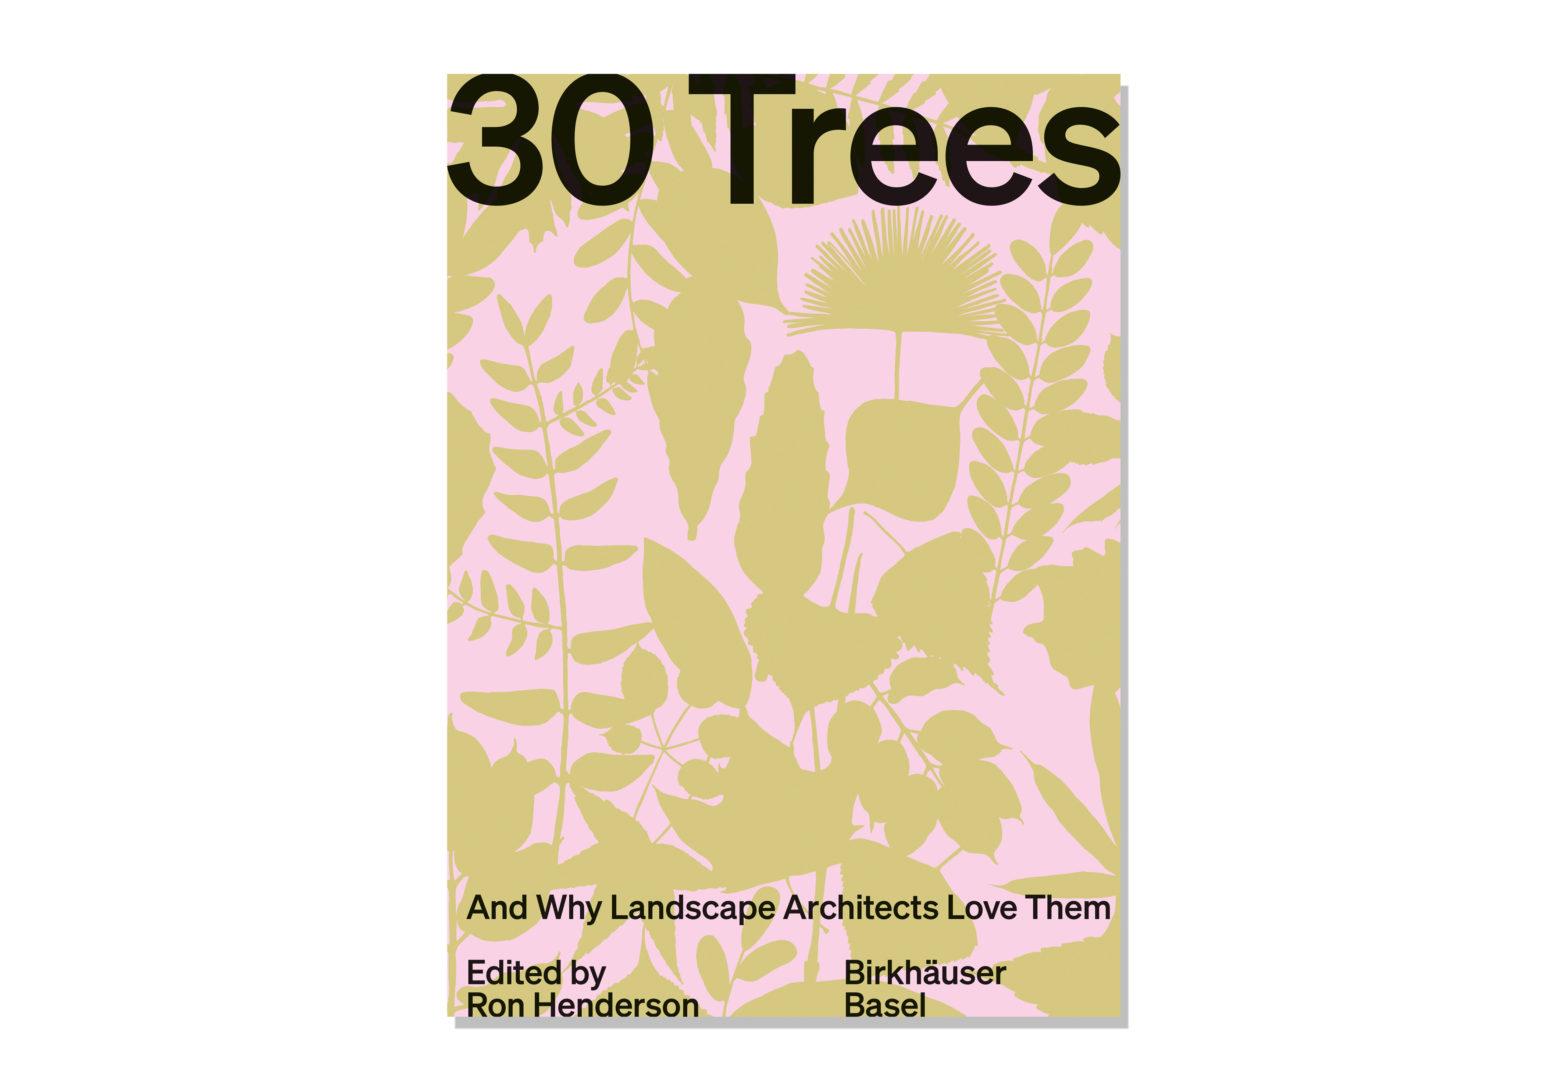 30 Trees | Book presentation